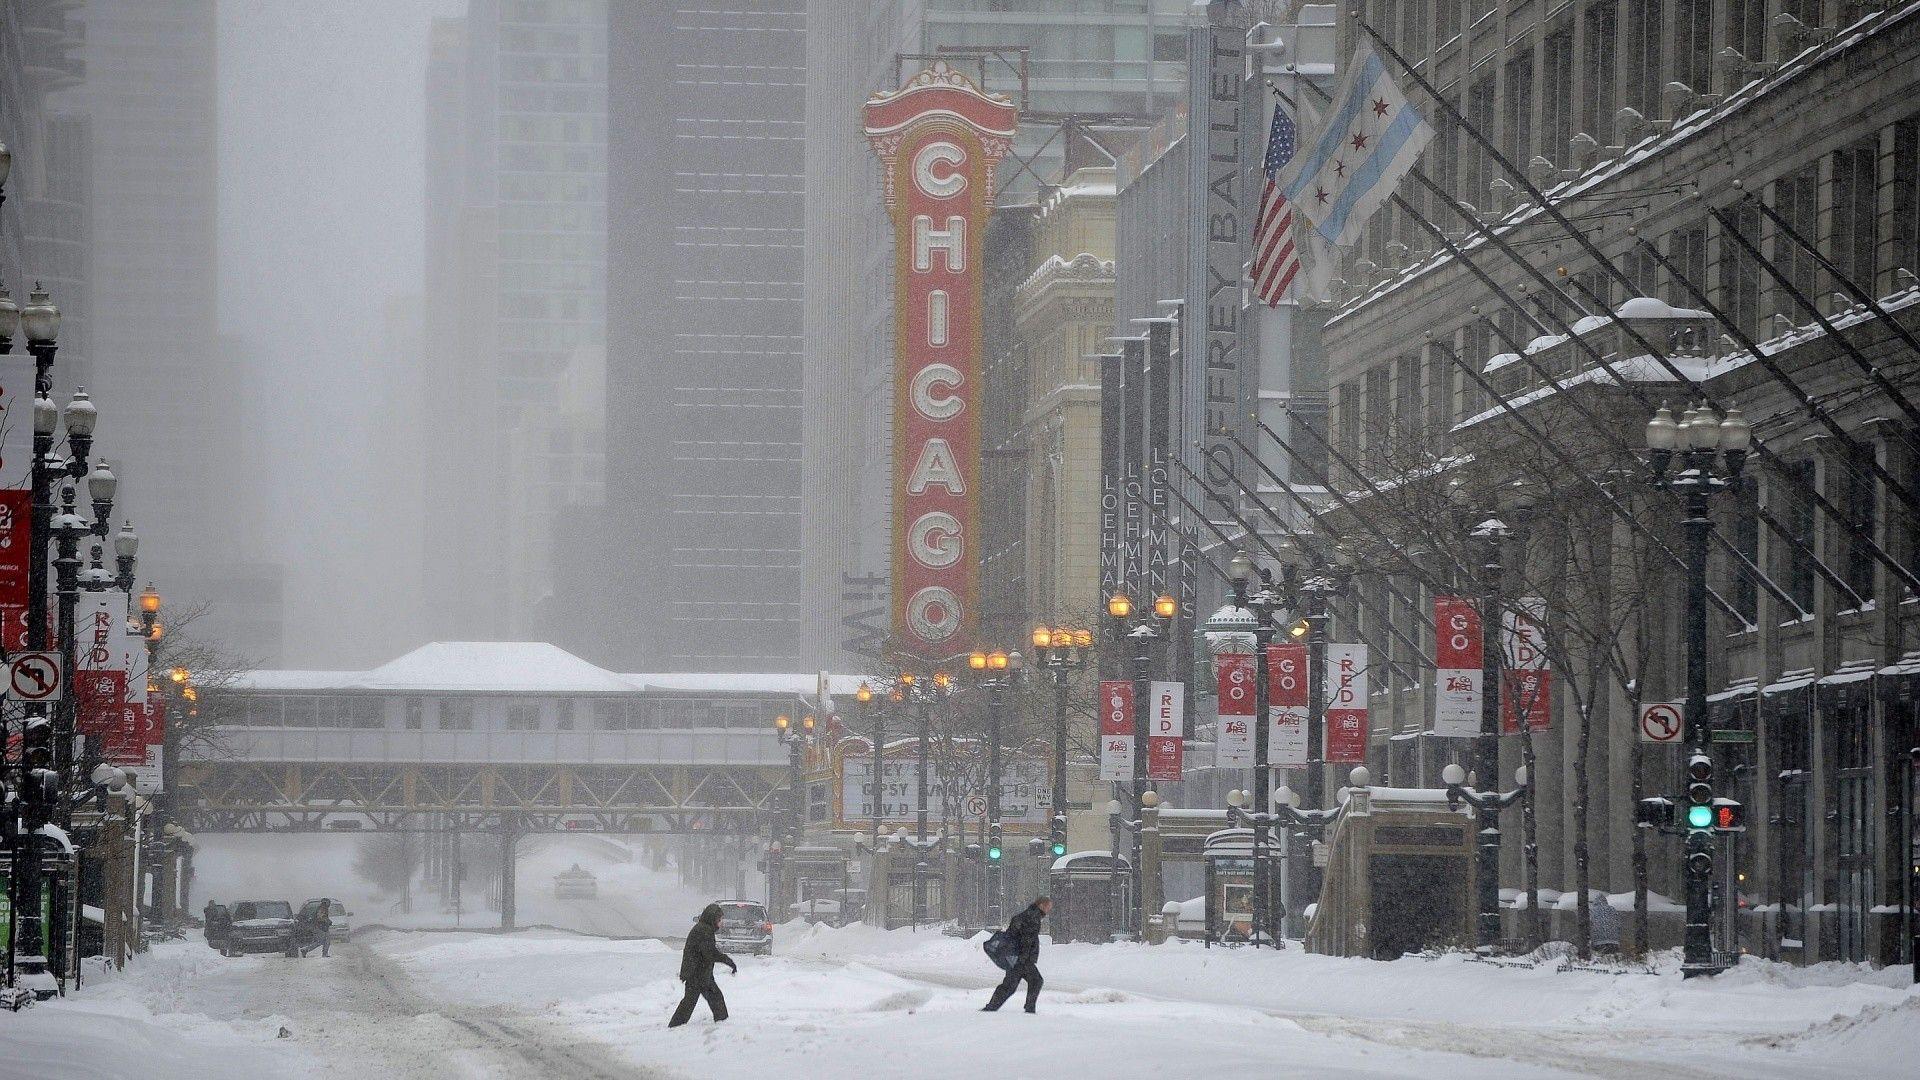 Chicago in a snow blizzard wallpaper. PC